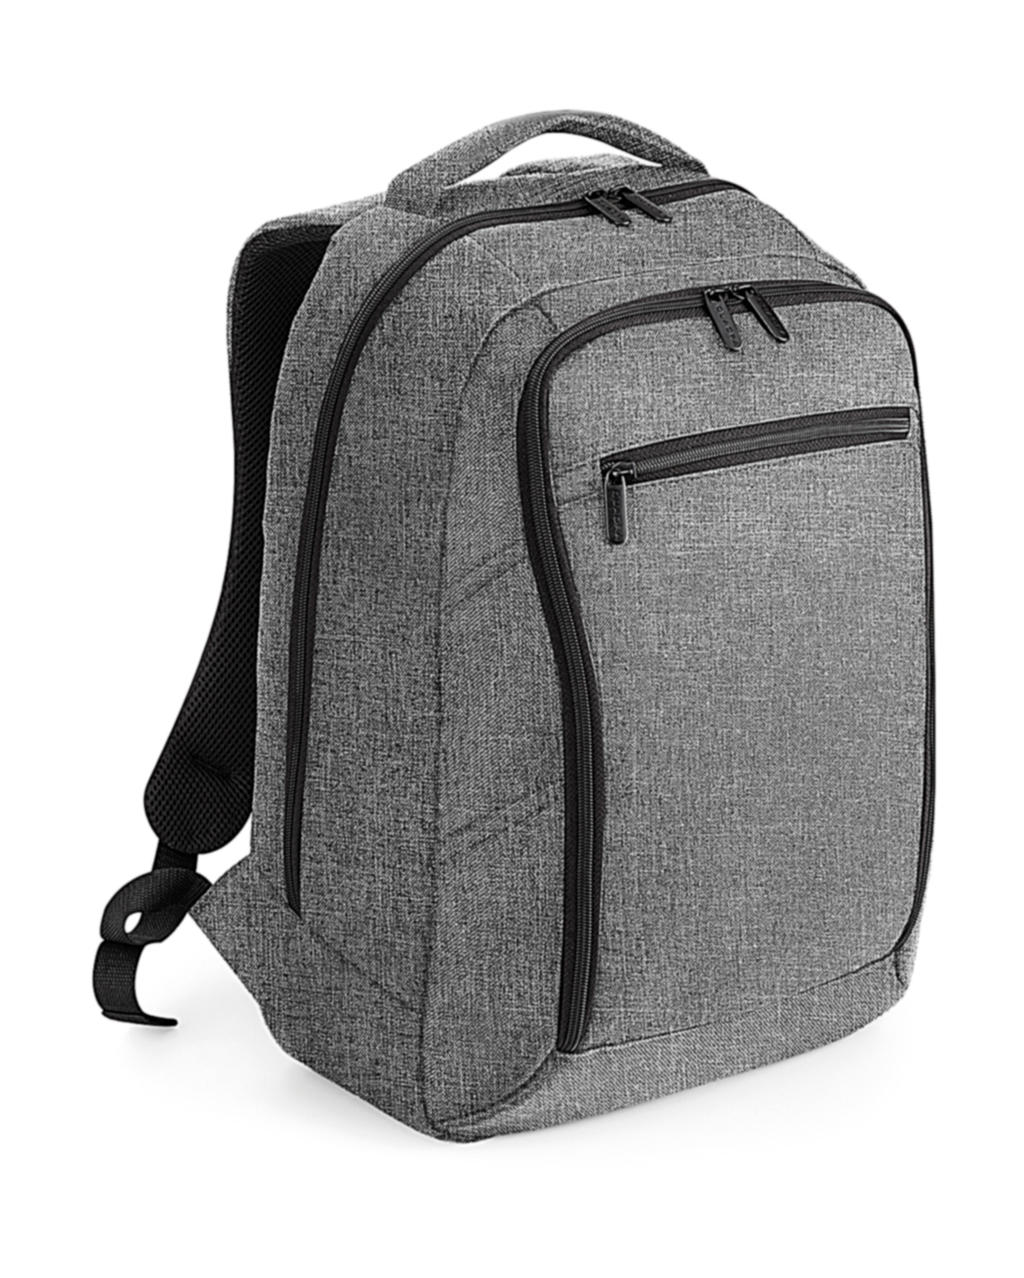  Executive Digital Backpack in Farbe Grey Marl